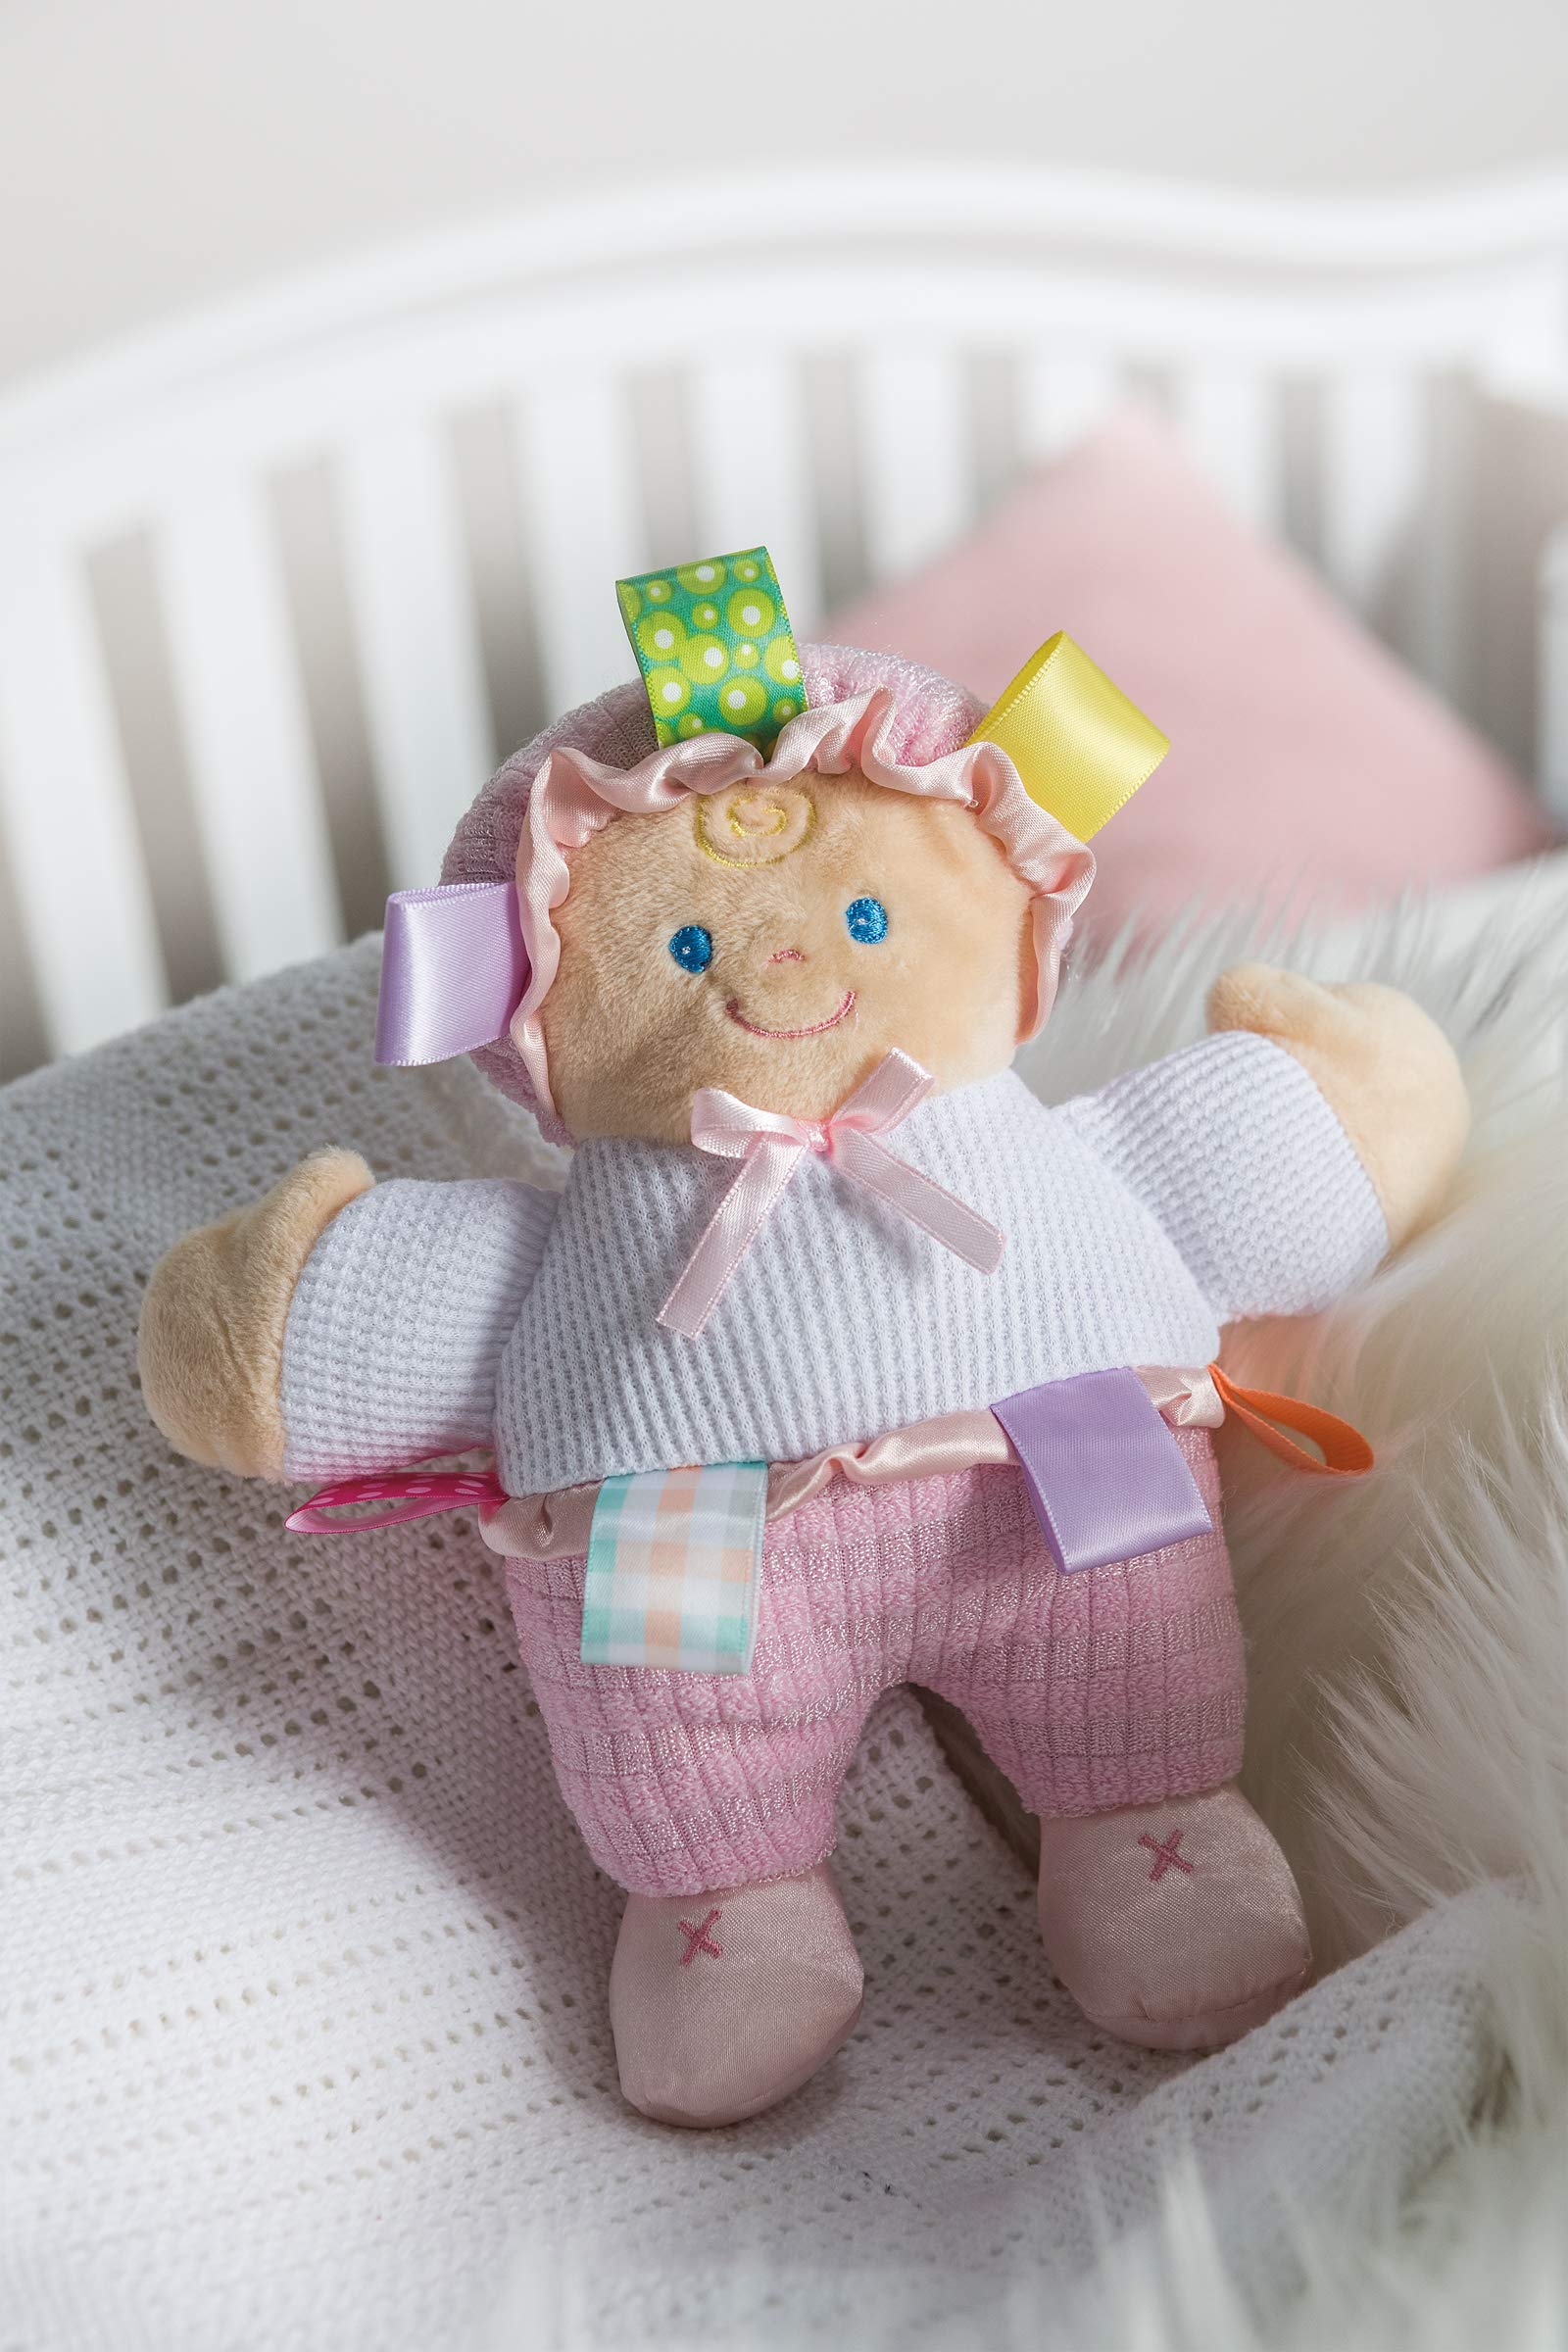 Mary Meyer Taggies Developmental Baby Doll, Pink, 8-Inch